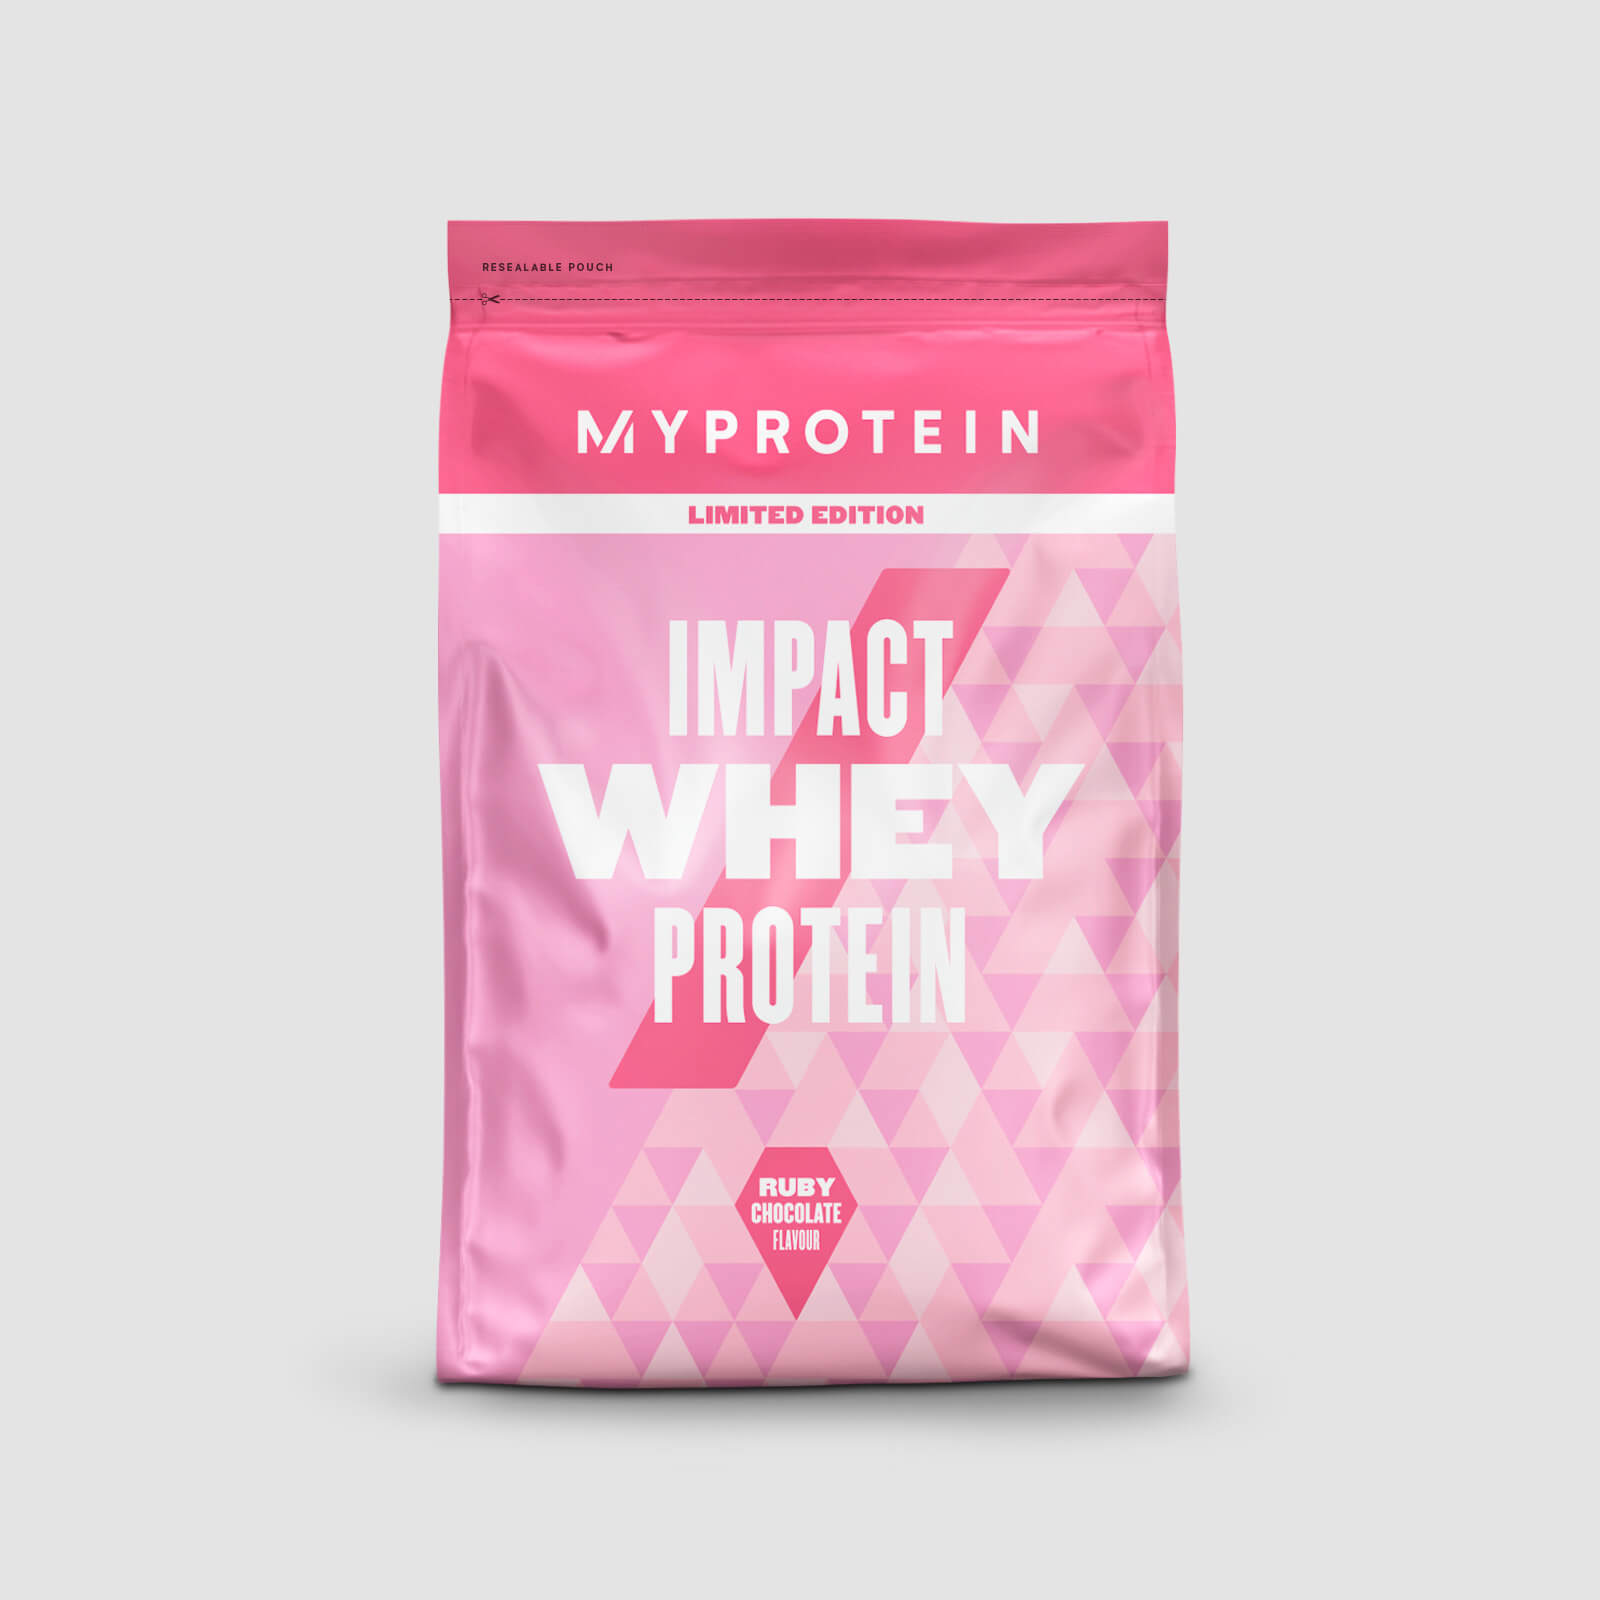 Myprotein Impact Whey Protein – Ruby Chocolate